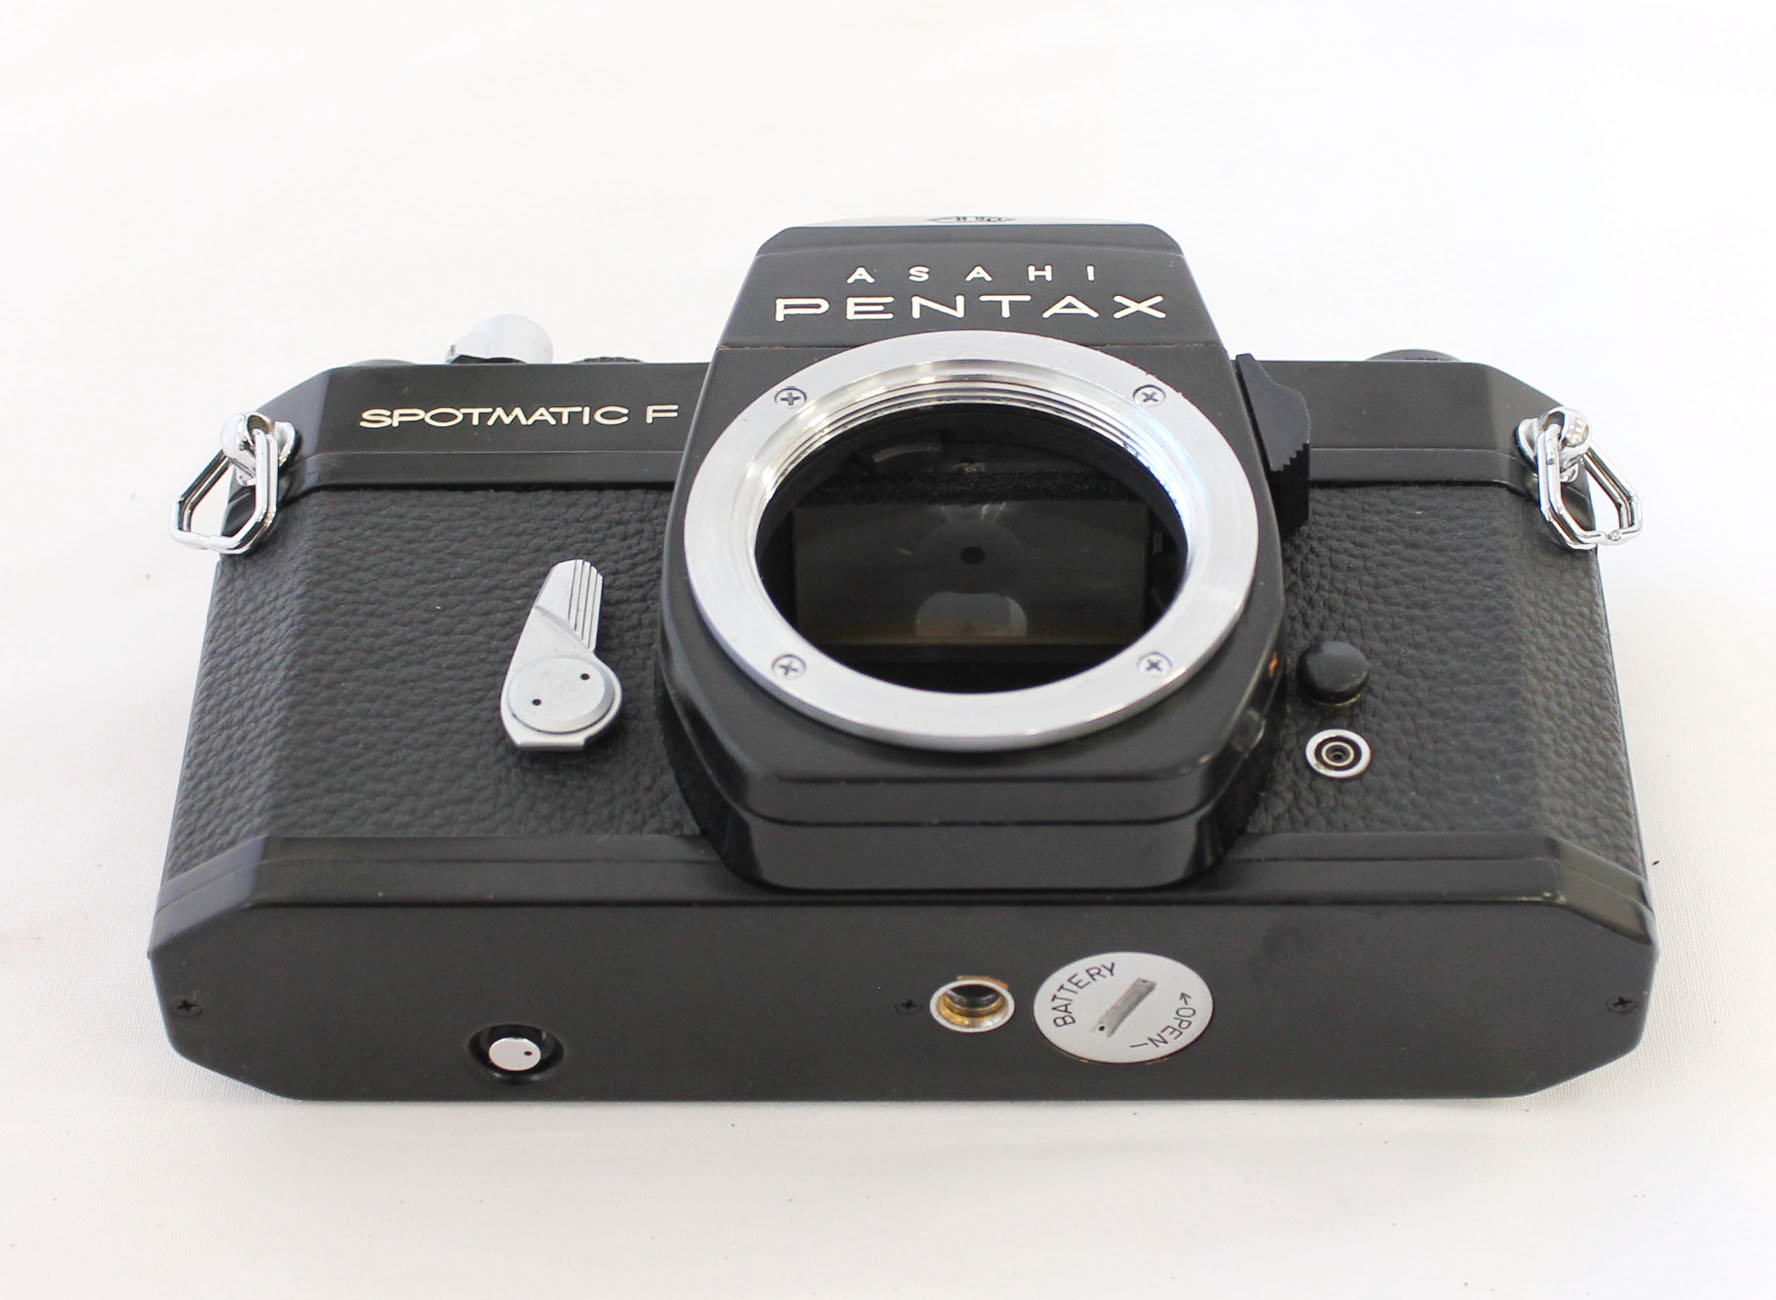 Asahi Pentax Spotmatic F SPF 35mm SLR Camera Black w/ SMC Super-Multi-Coated Takumar 55mm F/1.8 Lens from Japan Photo 9